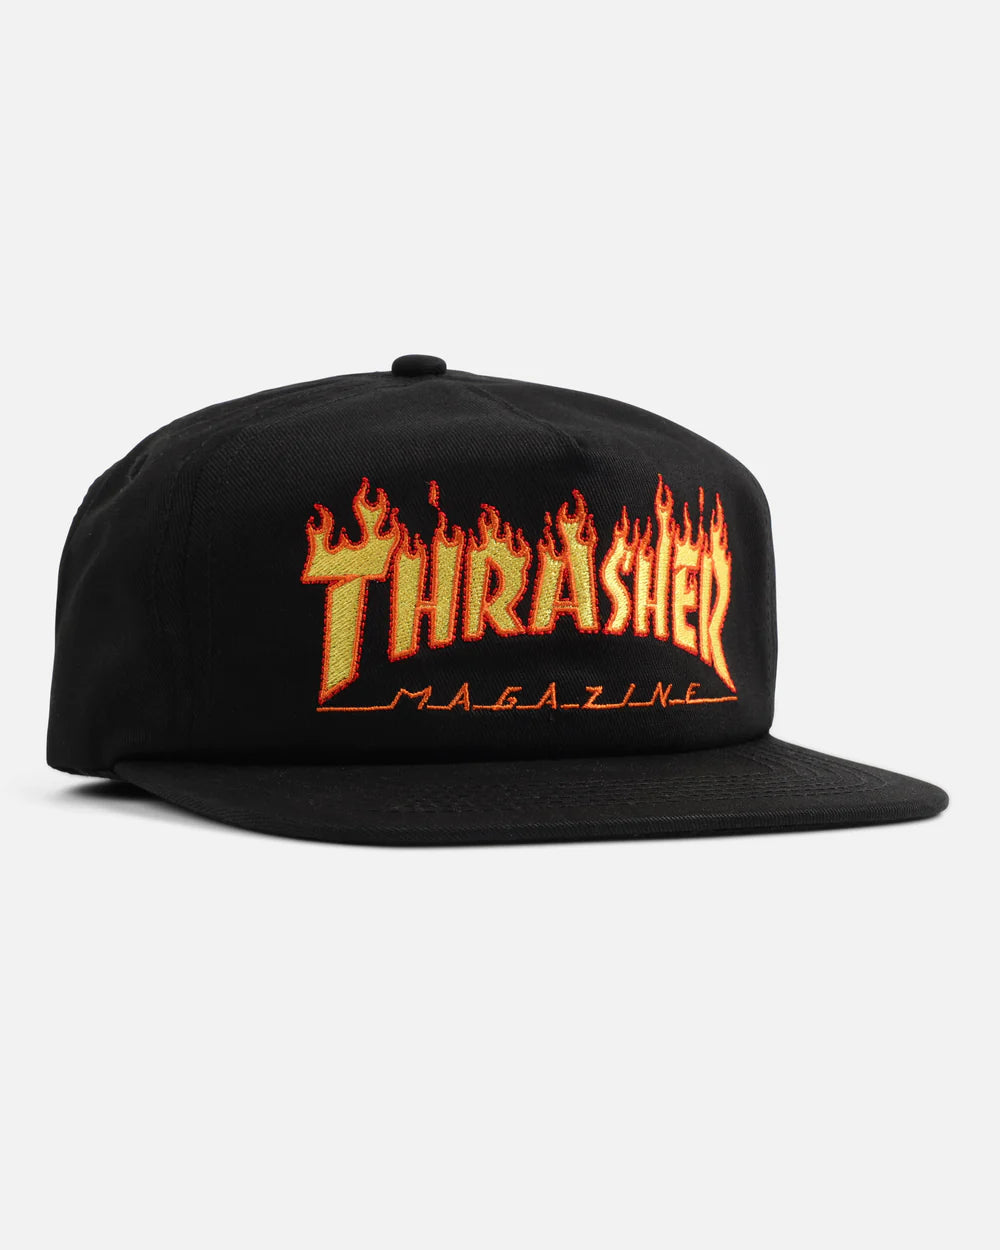 THRASHER - FLAME EMROIDERED SNAPBACK - BLACK